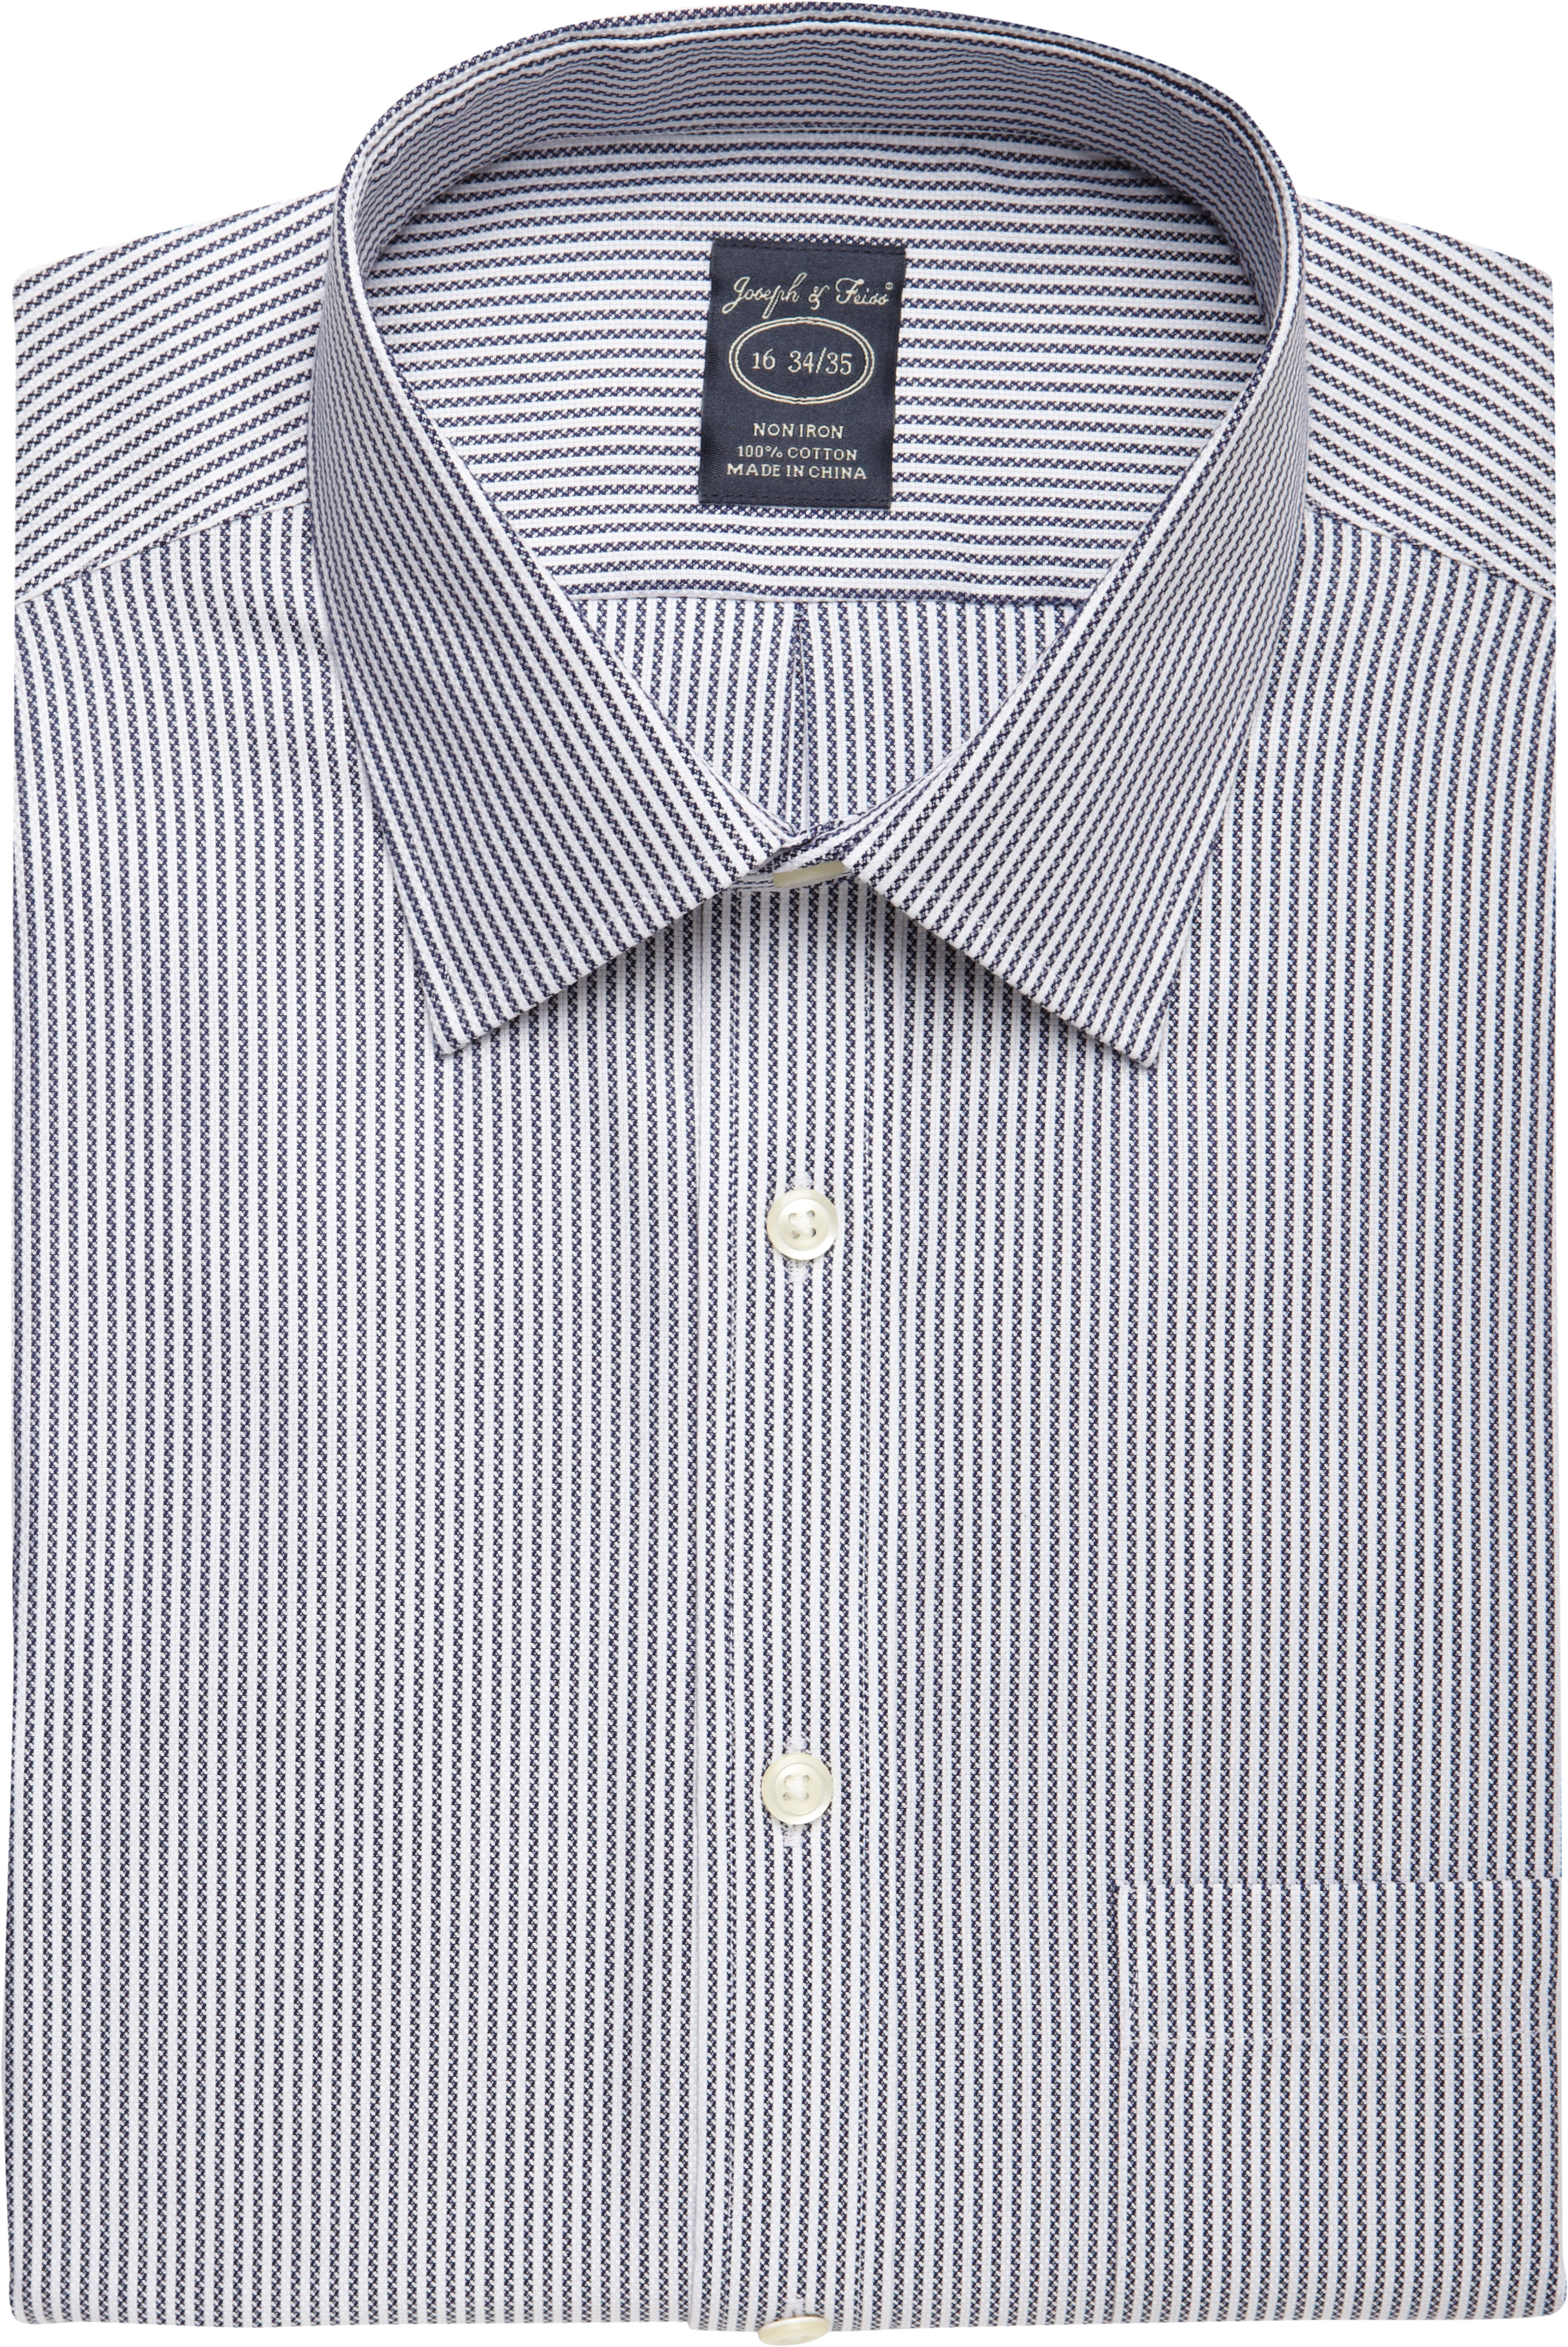 Joseph & Feiss Navy Stripe Modern Fit Non-Iron Dress Shirt - Men's Sale ...